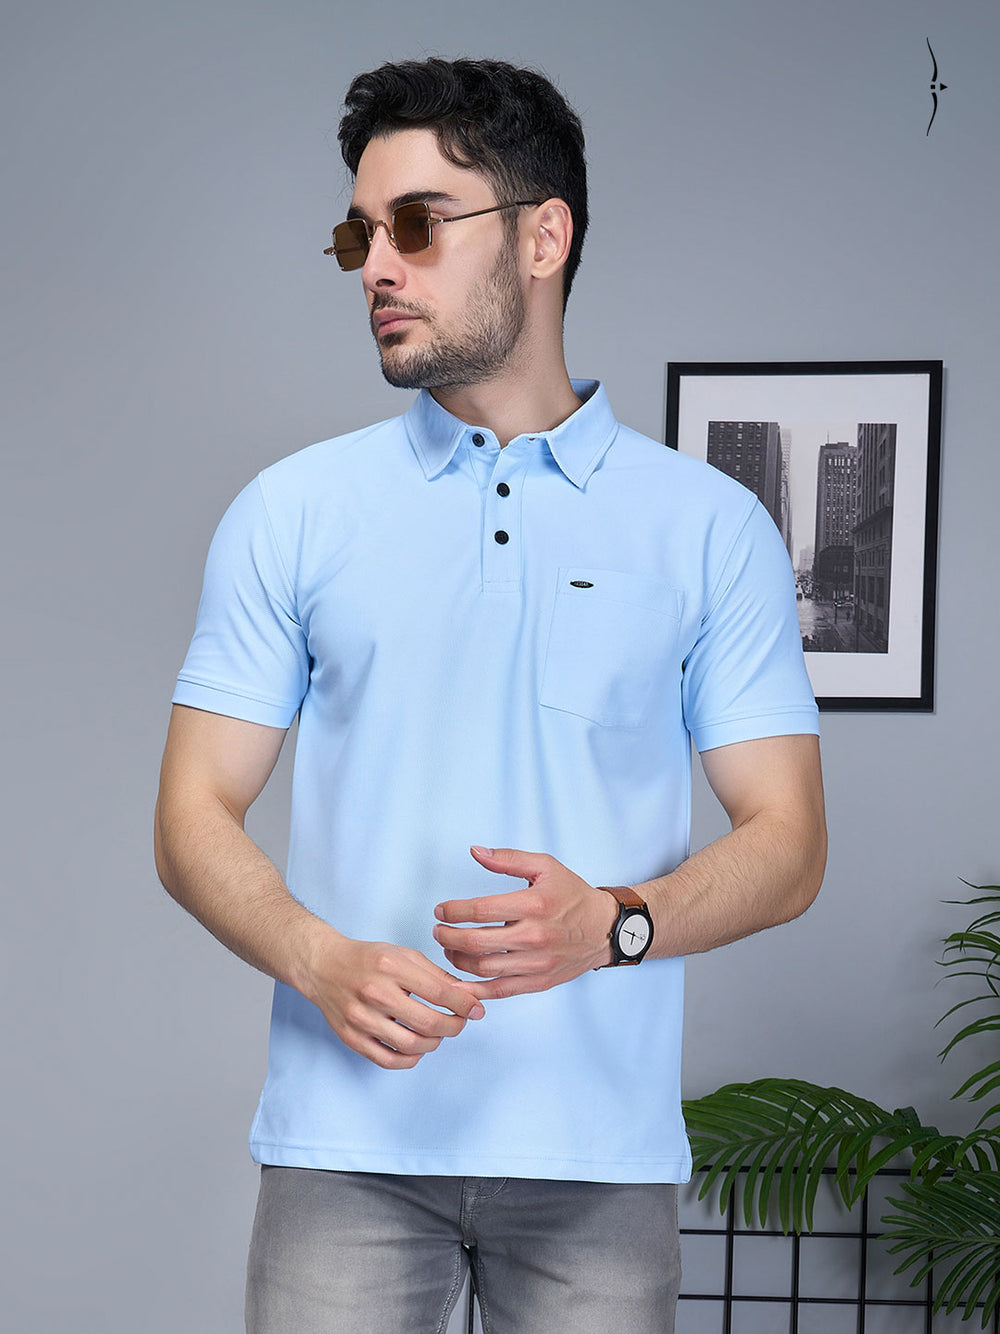 fs-300 collar half sleeve light blue polo tshirt for men-essa#color_carolina-blue